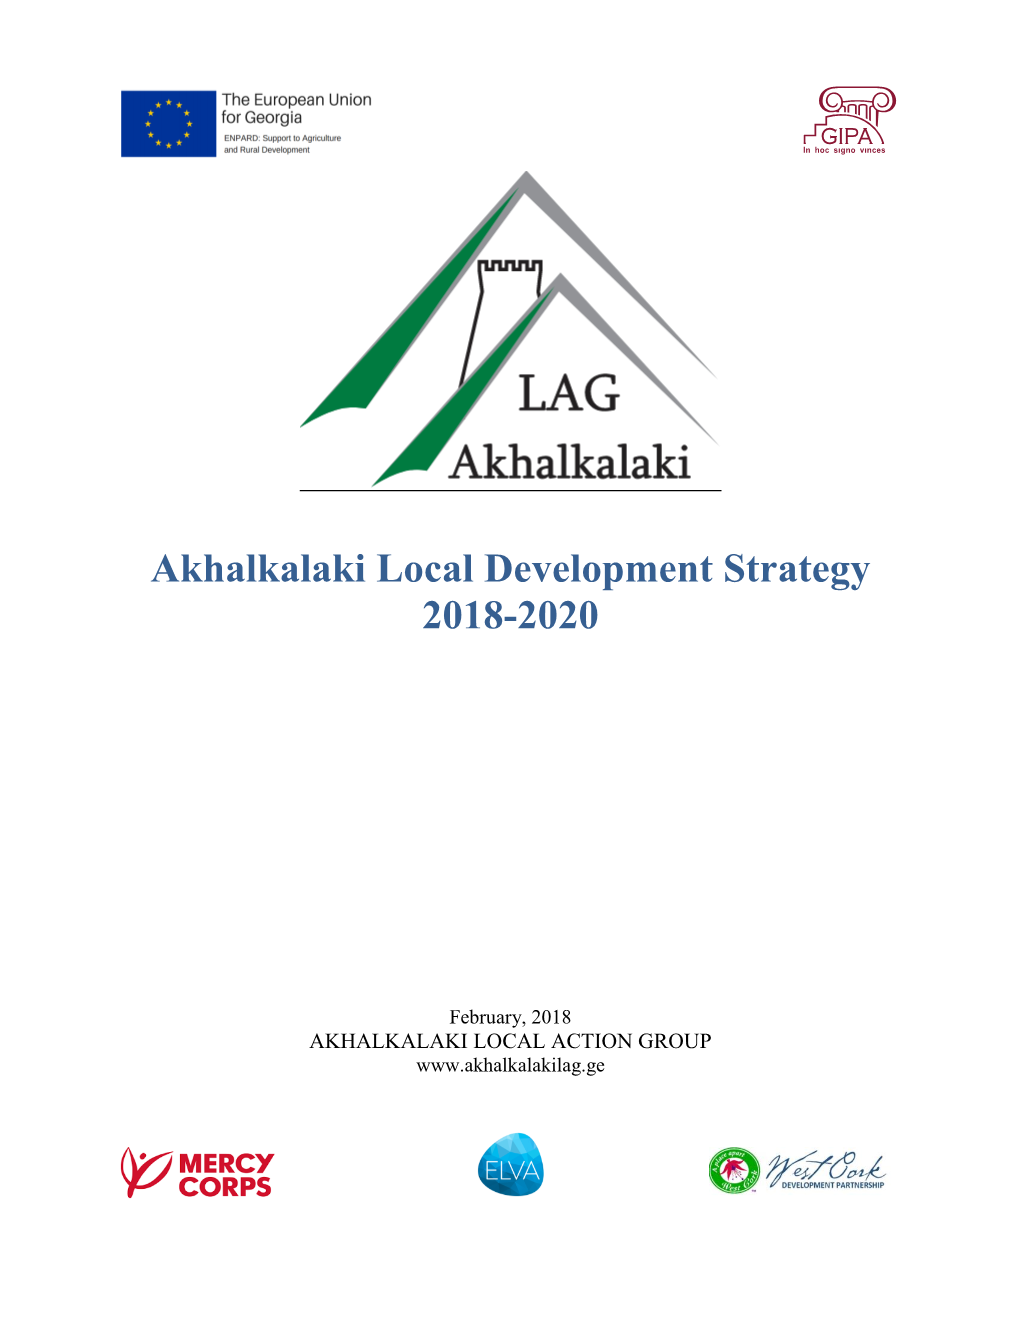 Akhalkalaki Local Development Strategy 2018-2020